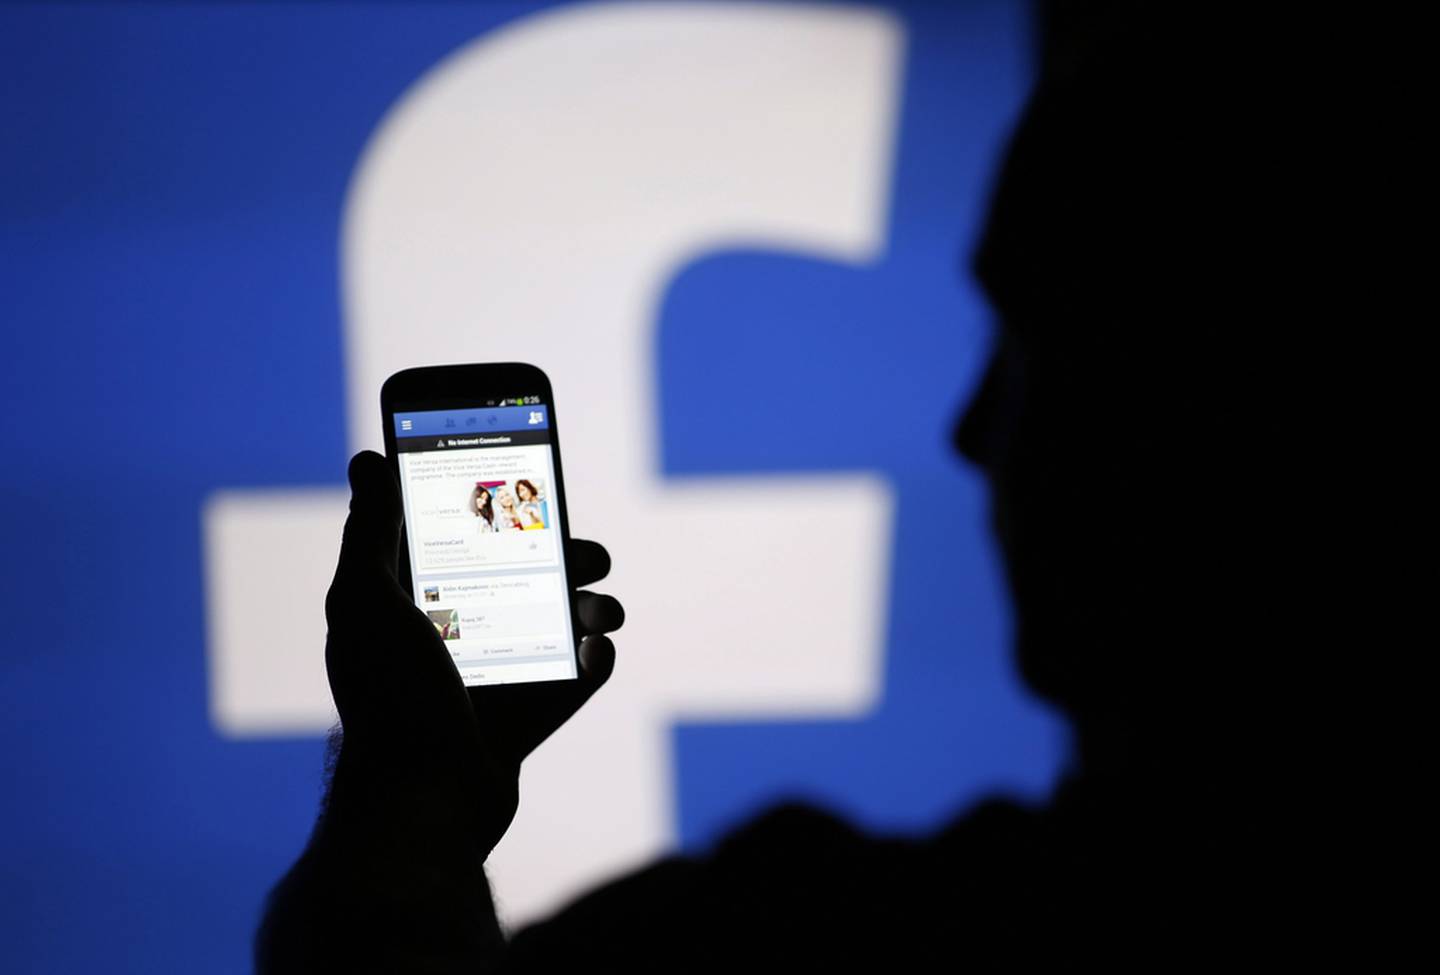 Facebook said it wants to be transparent as it develops its bonus programmes for creators. Reuters